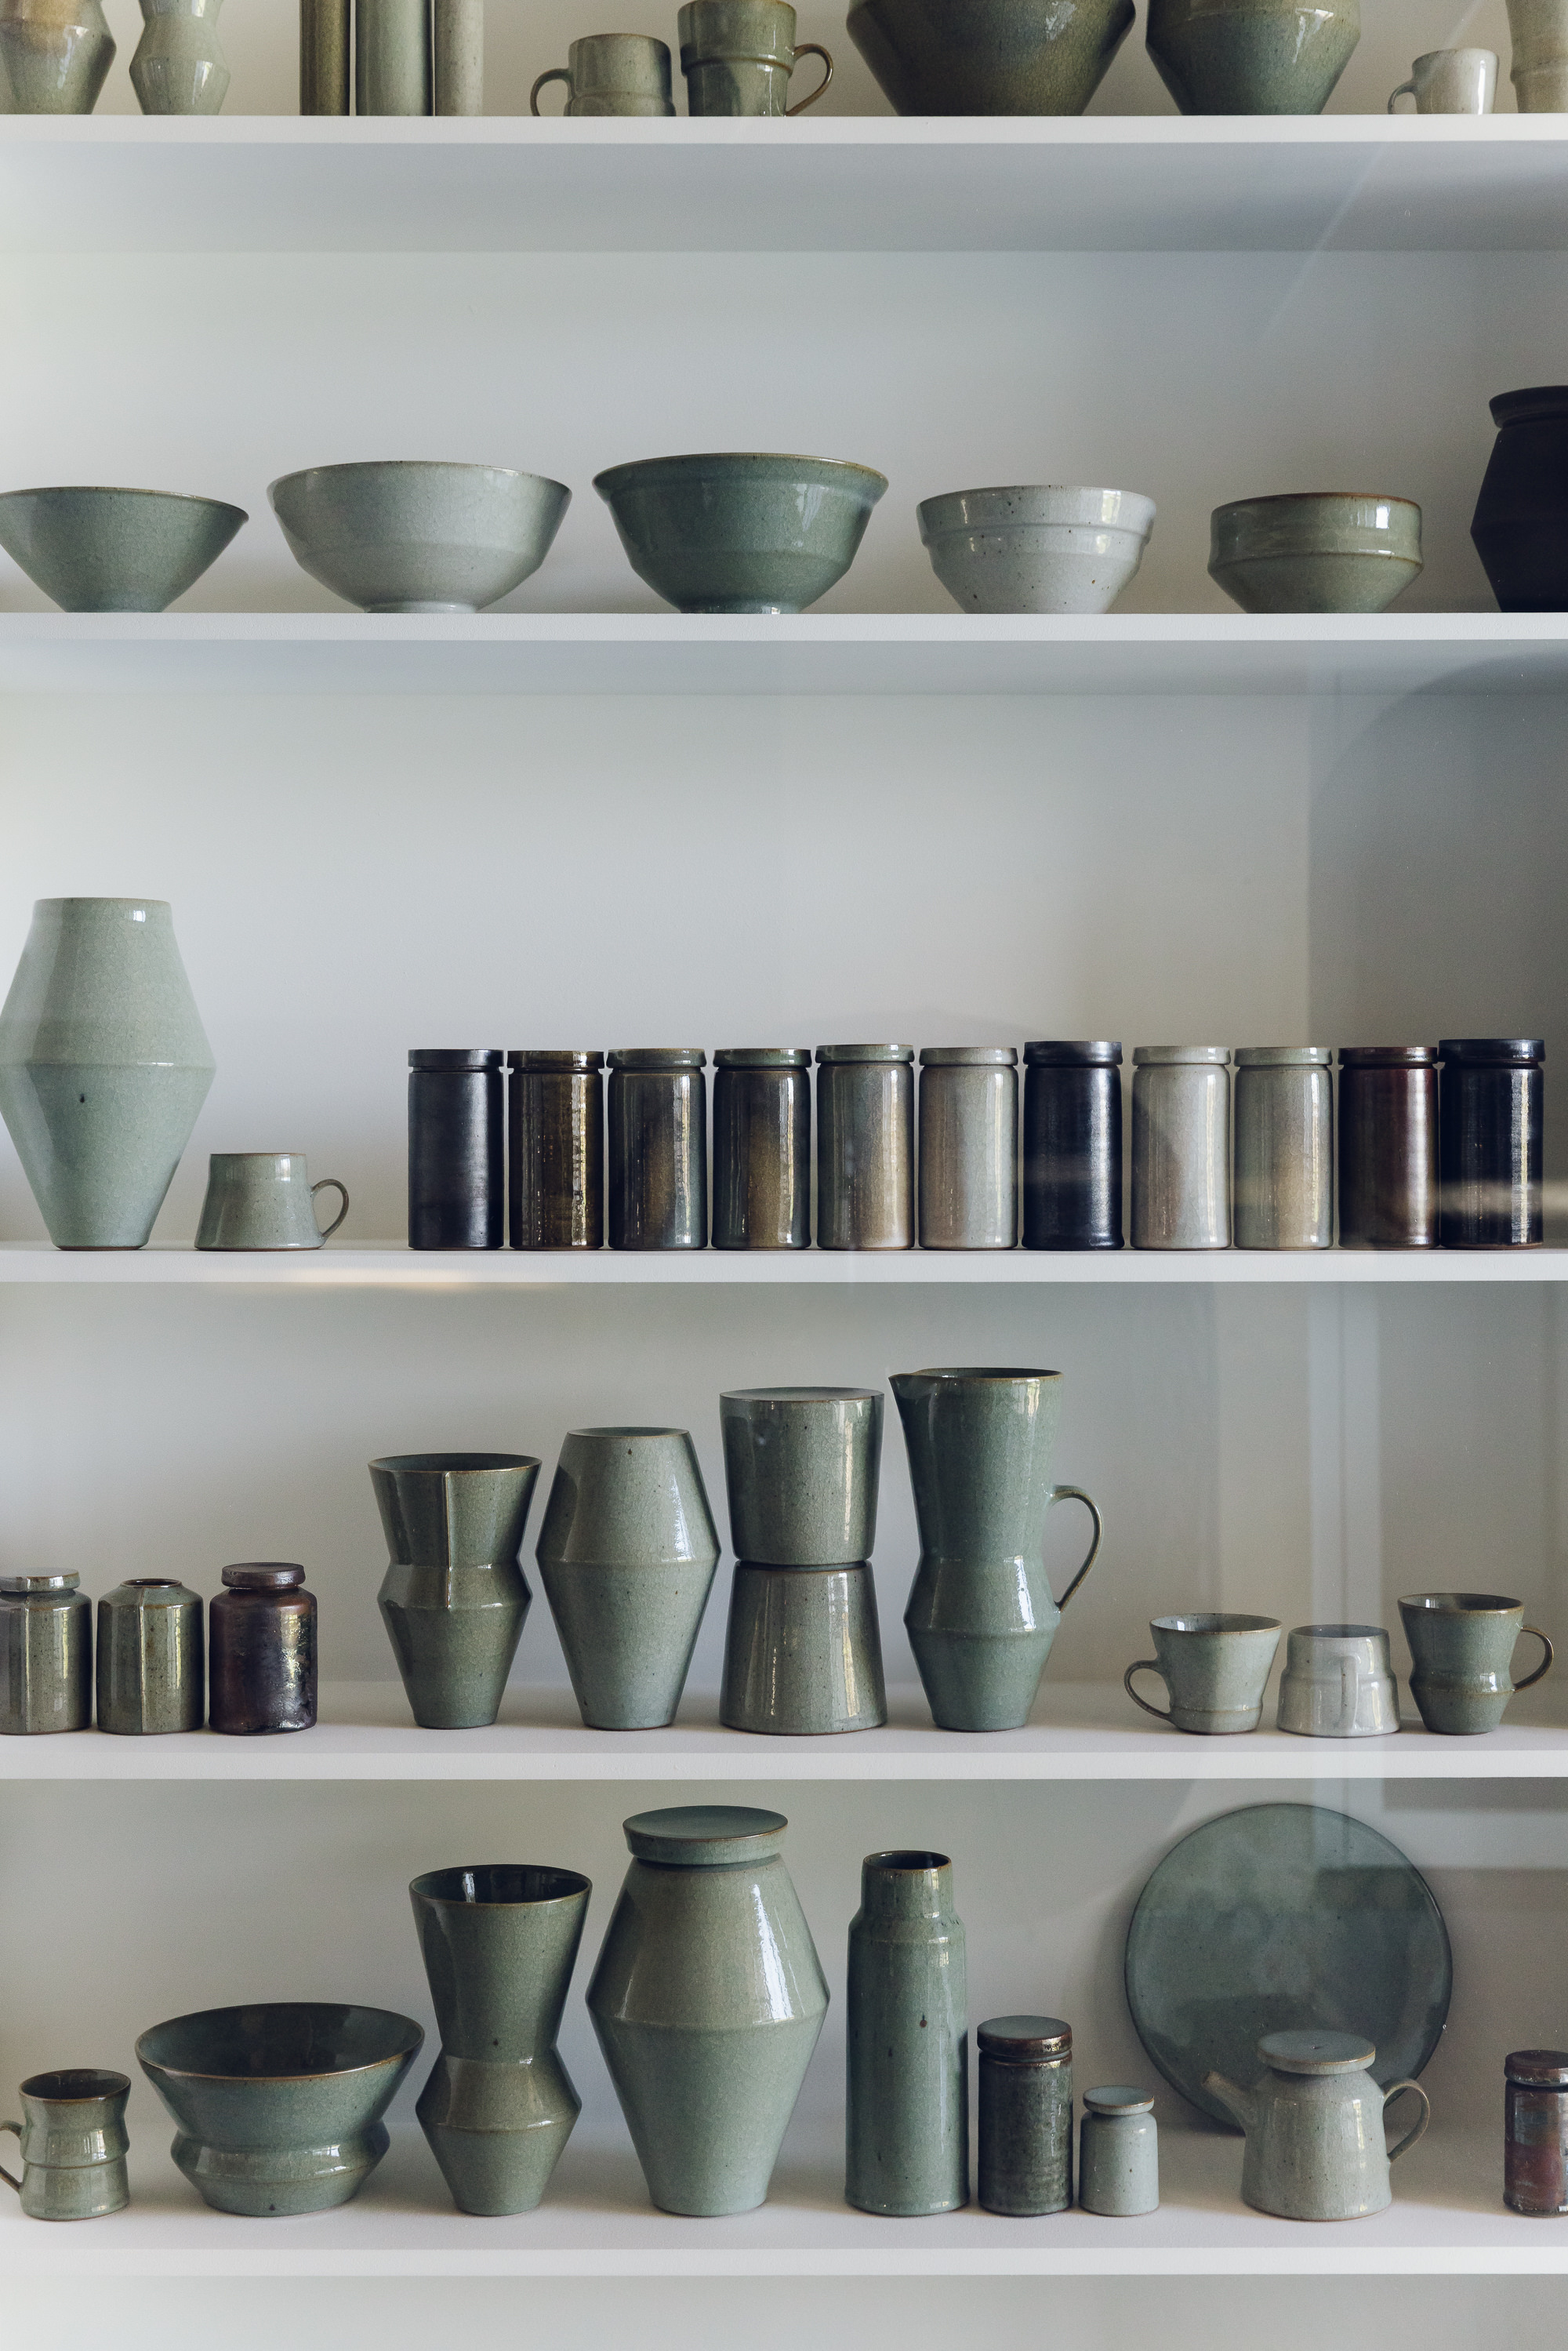 Ceramic vessels on shelves